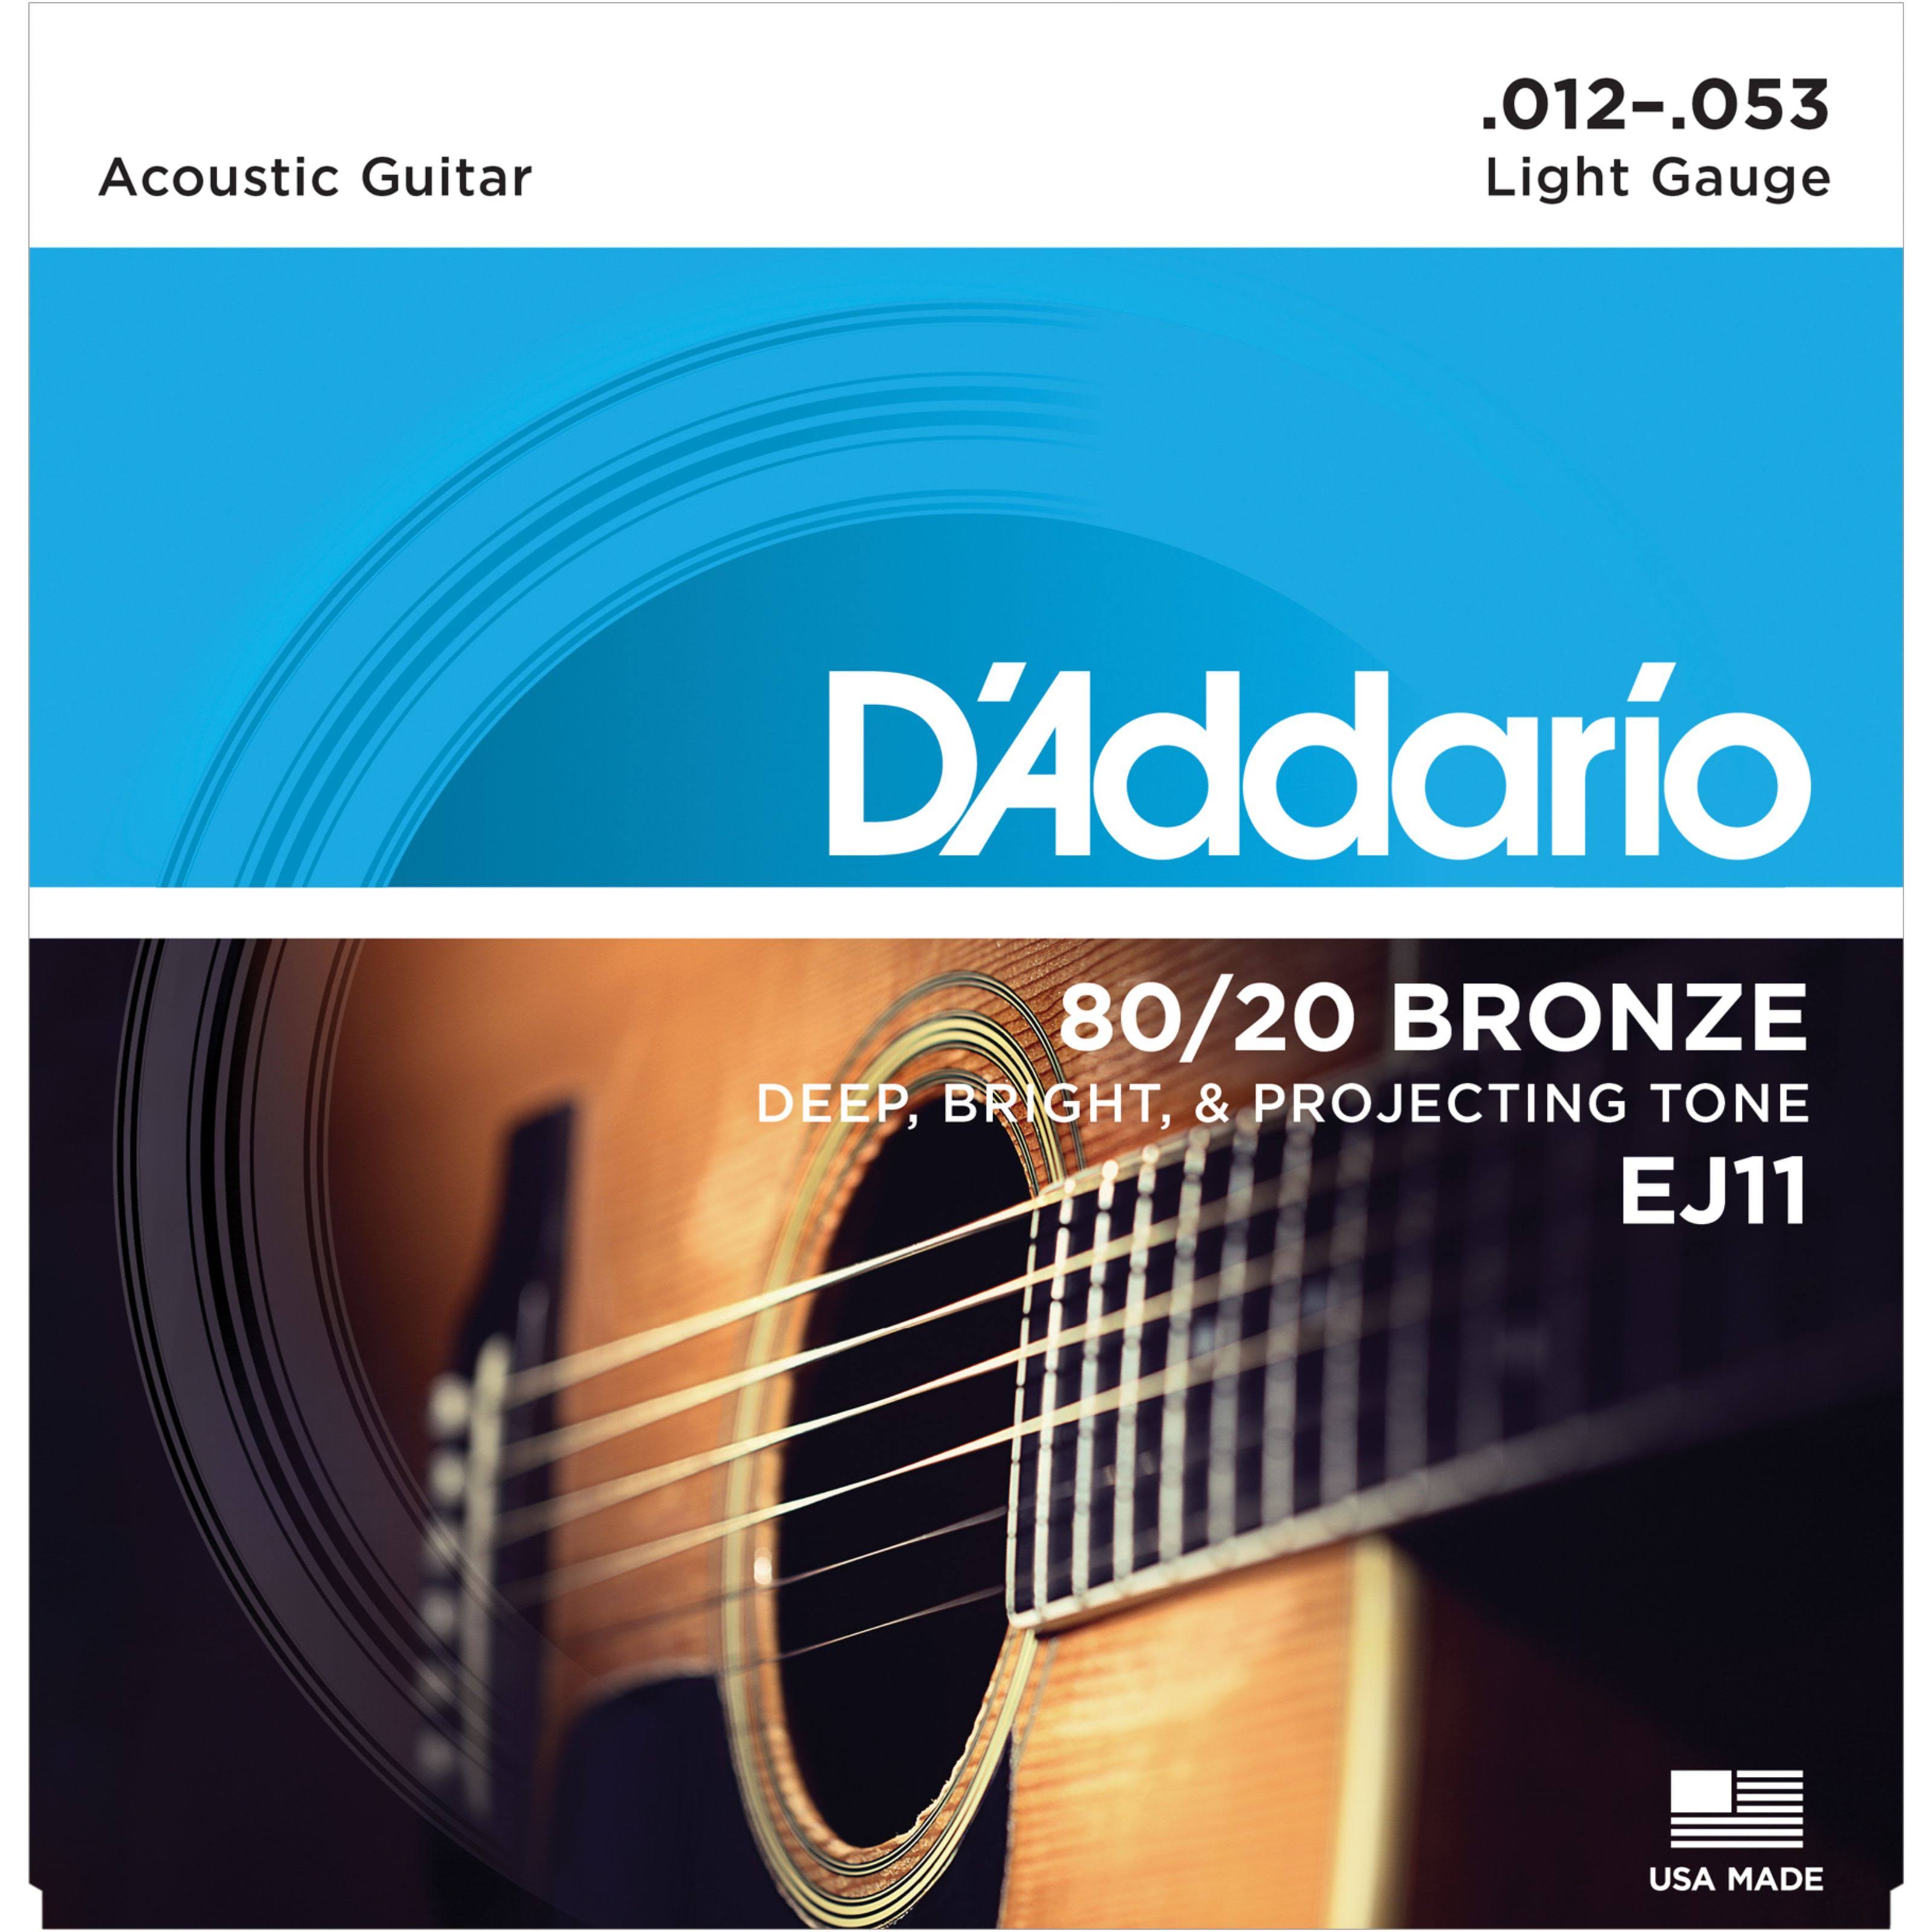 D'addario EJ11 80/20 Bronze Acoustic Guitar Strings - Light Gauge 12-53